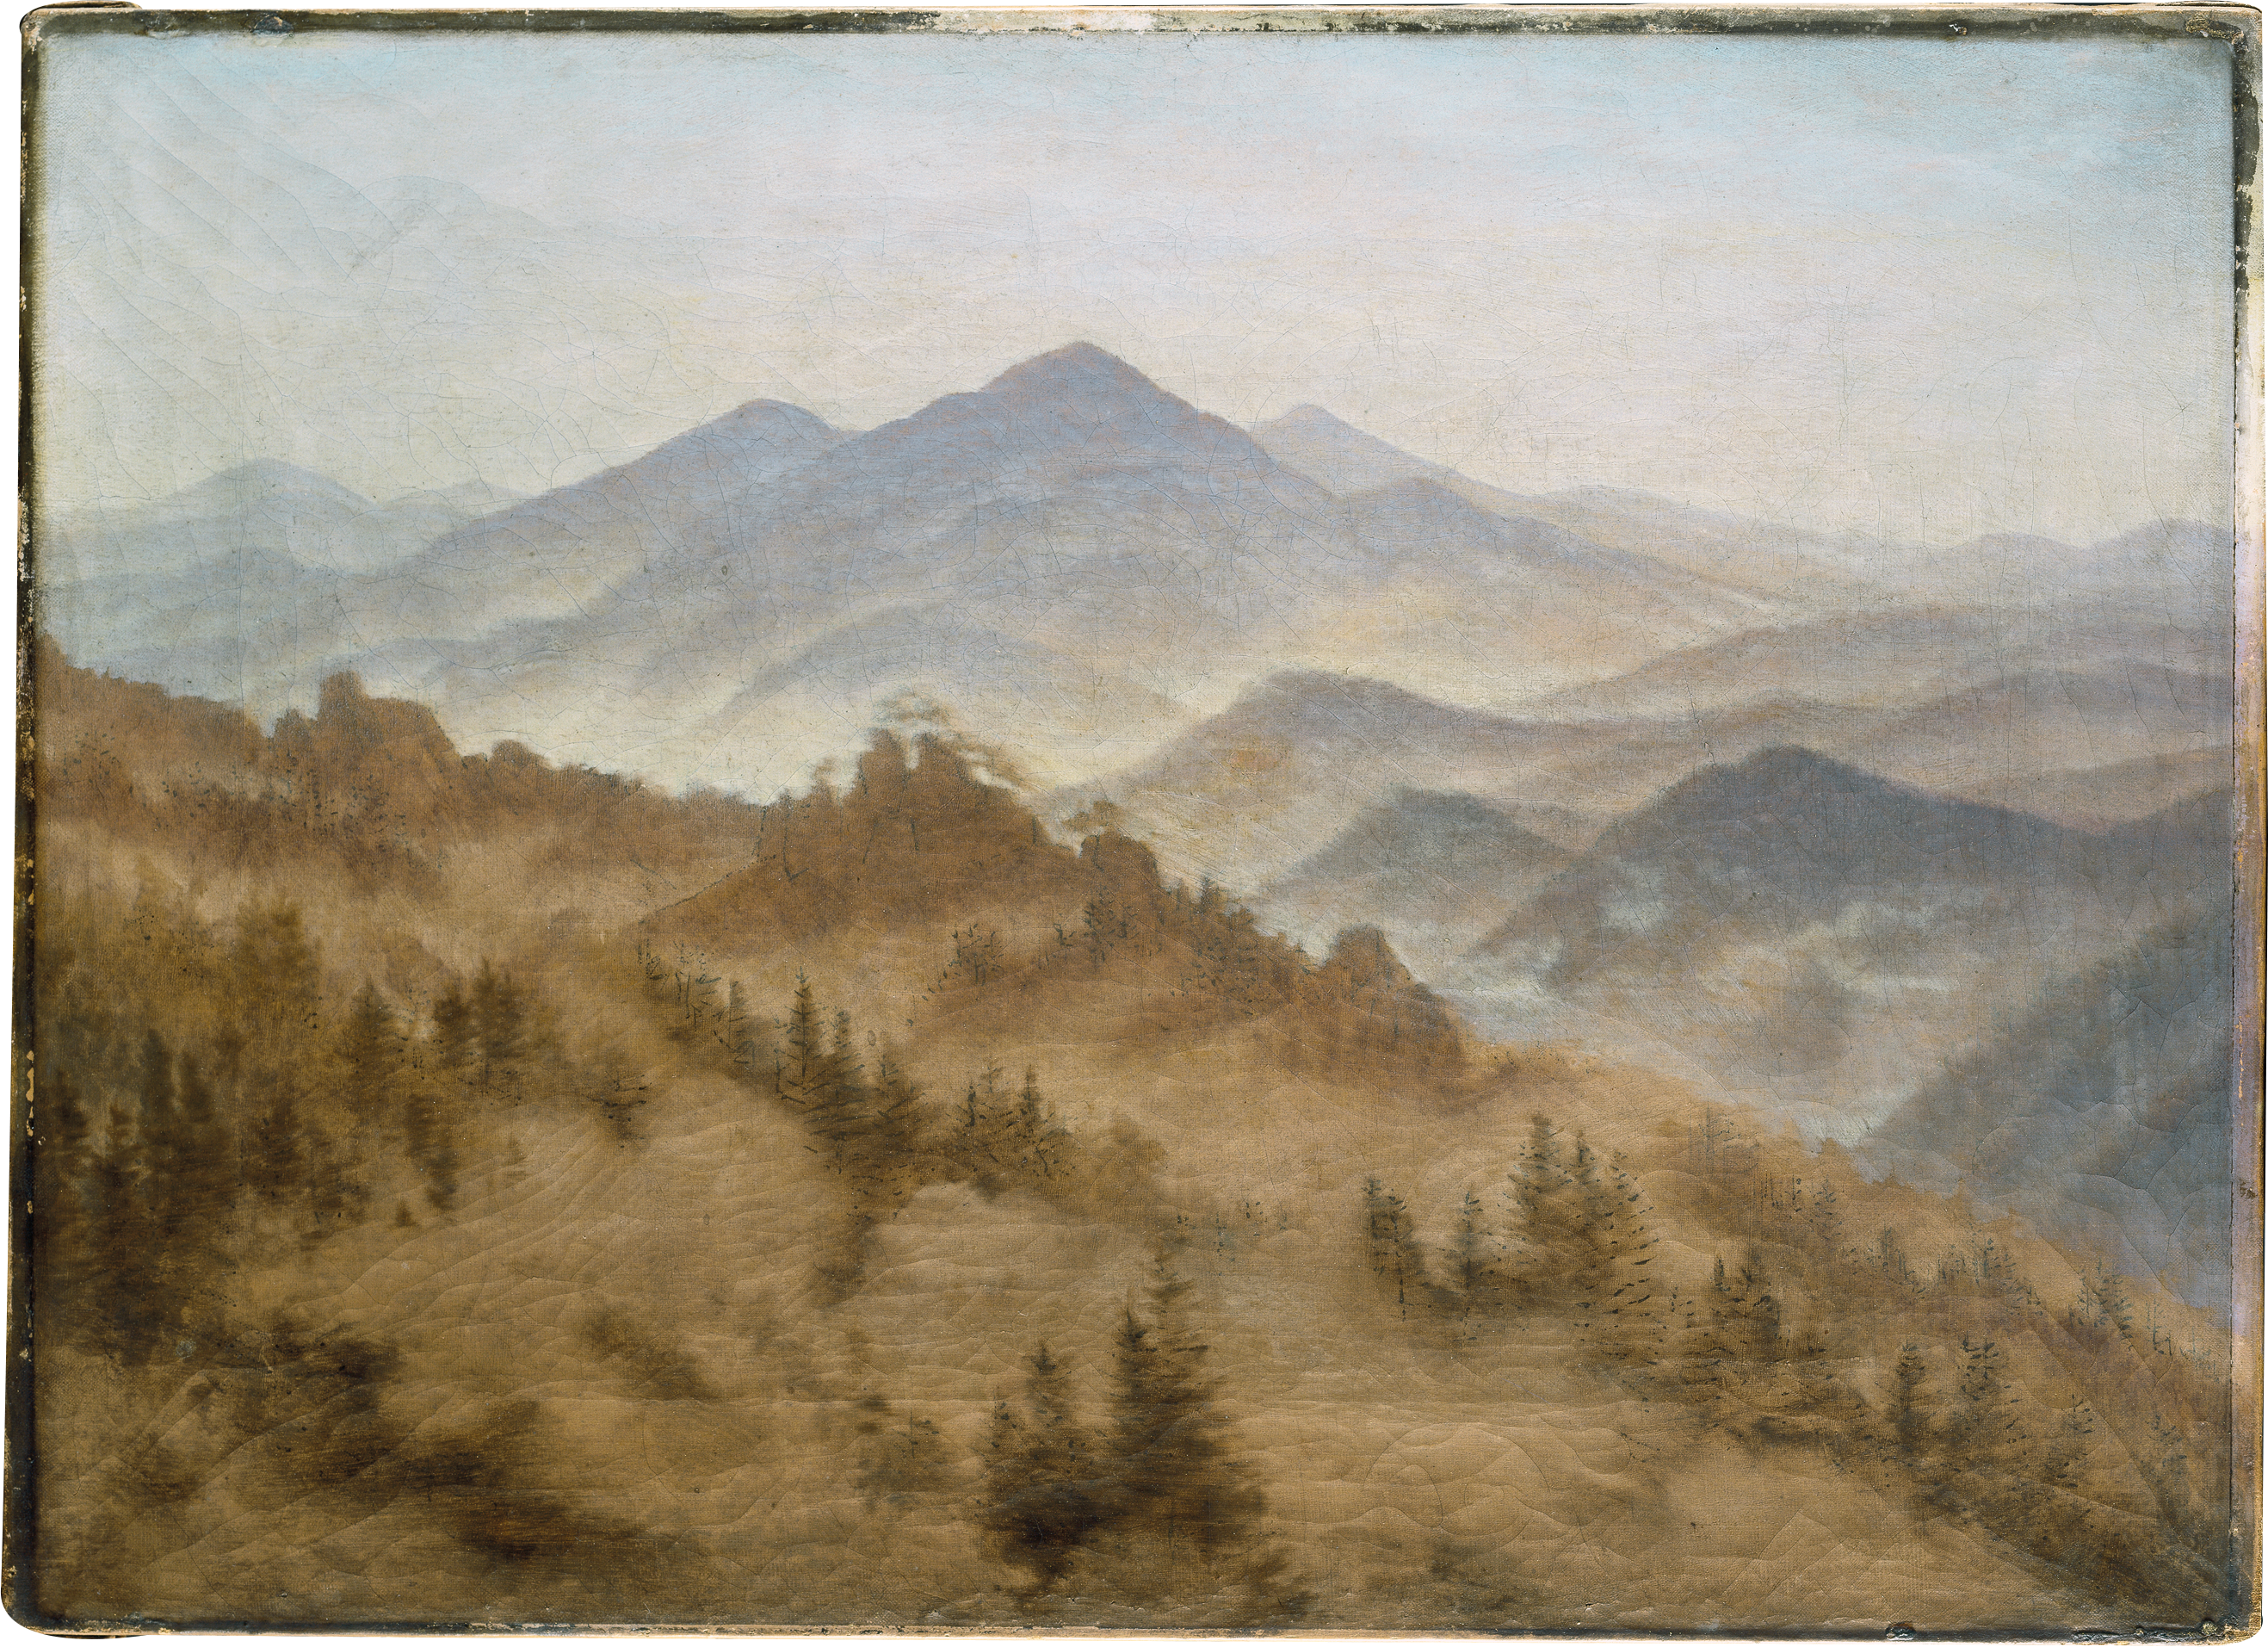 Mountains in the Rising Fog by Caspar David Friedrich - c. 1835 - 34.9 x 48.5 cm Städel Museum